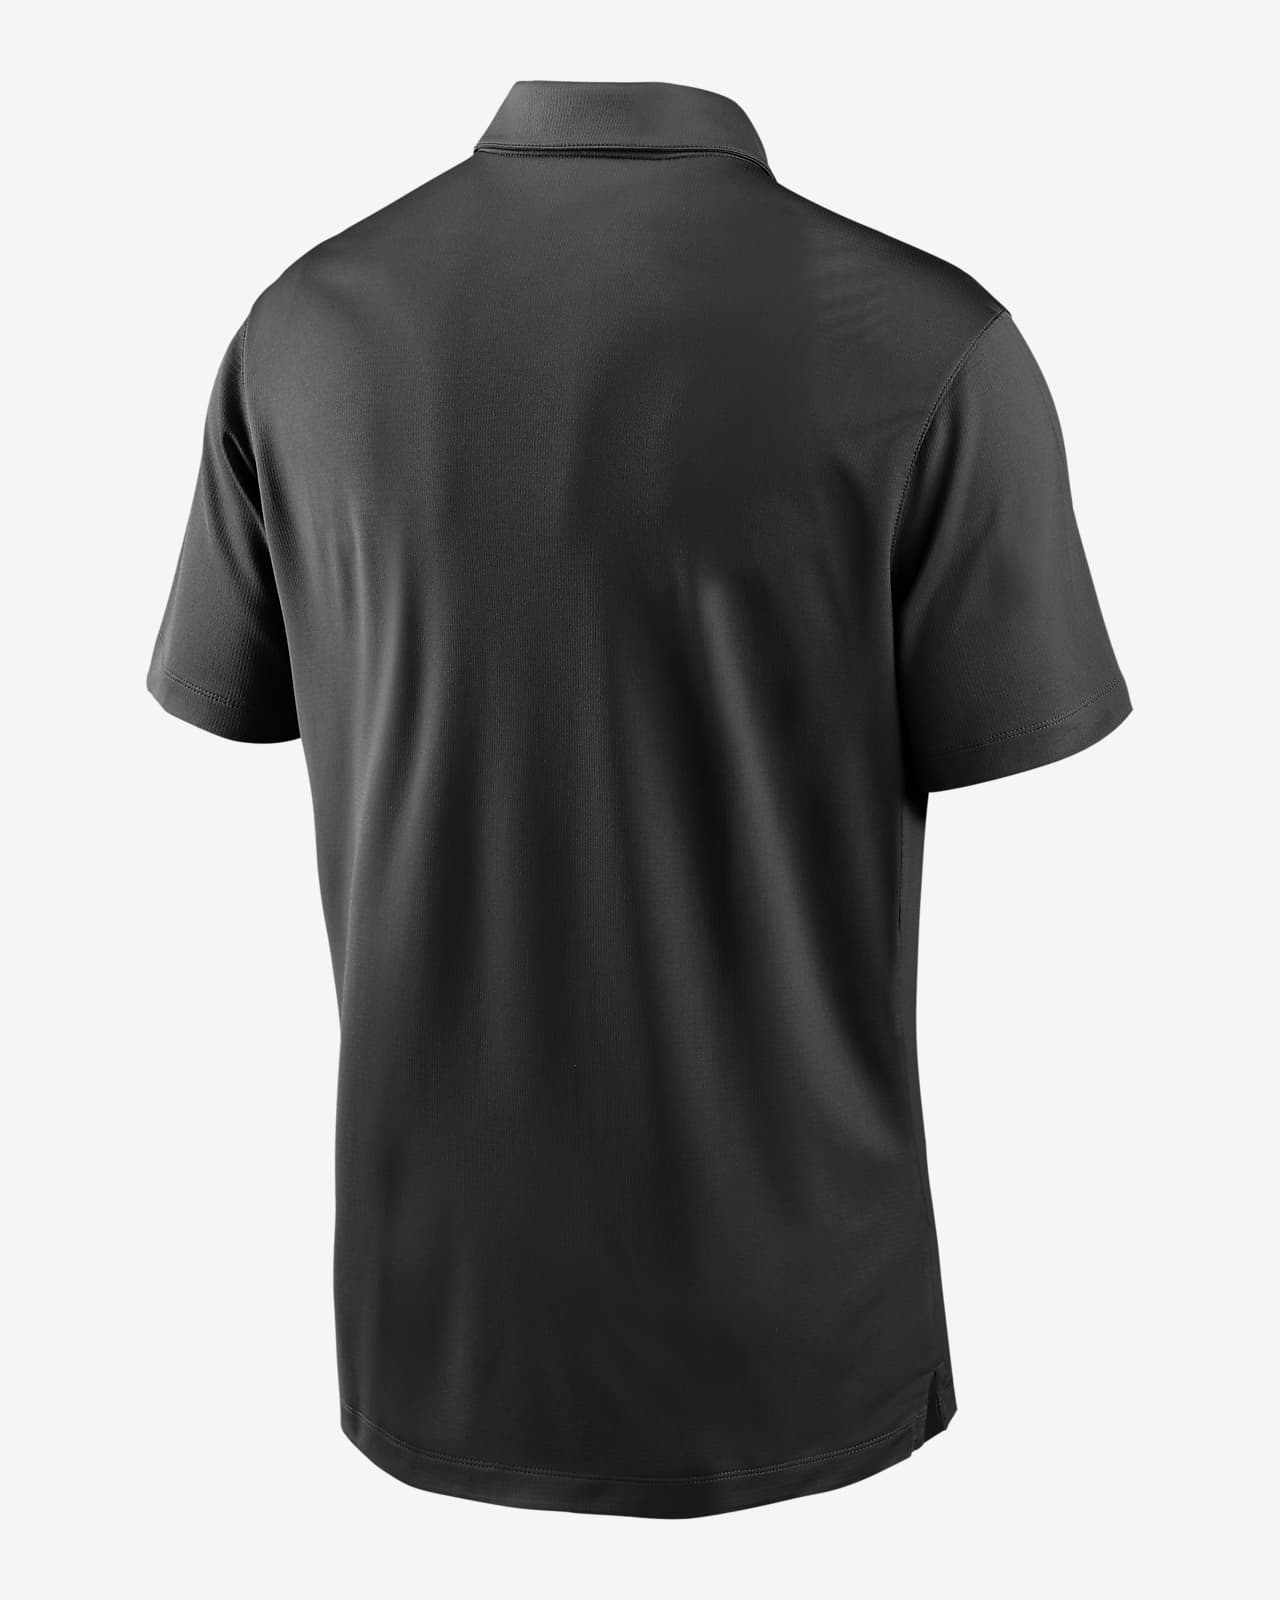 Men's Arizona Diamondbacks Nike Black Team T-Shirt